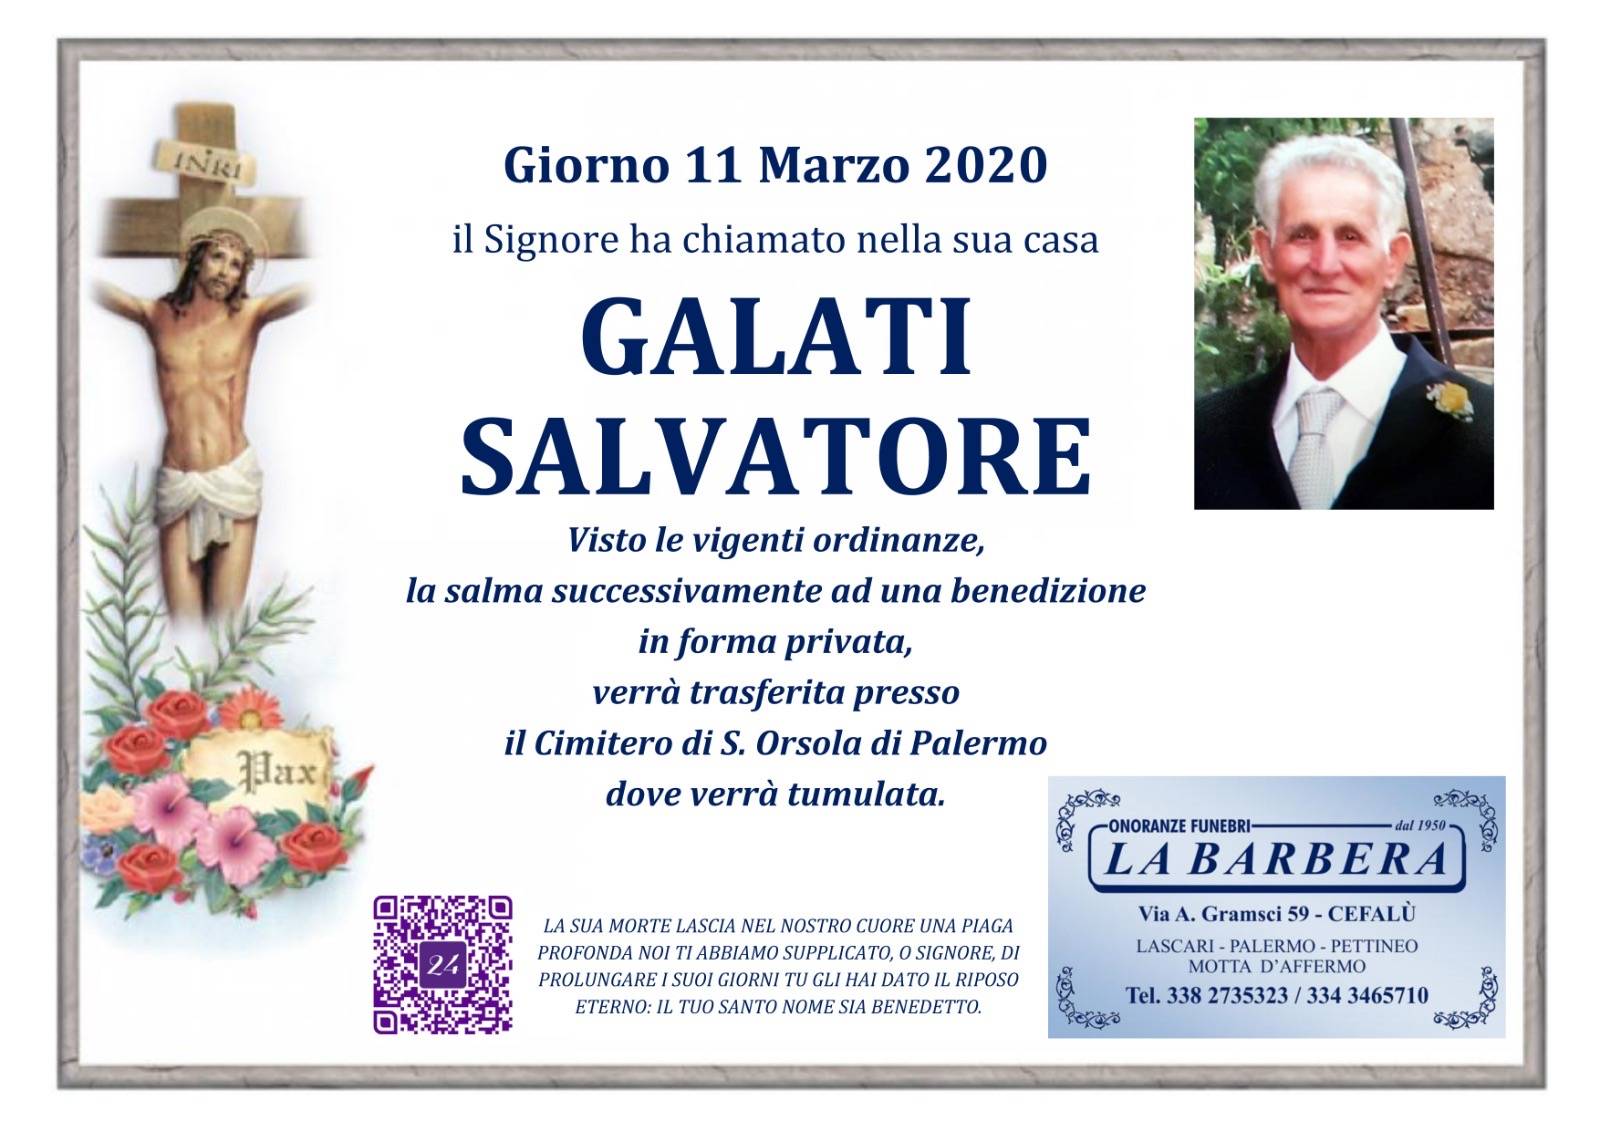 Salvatore Galati